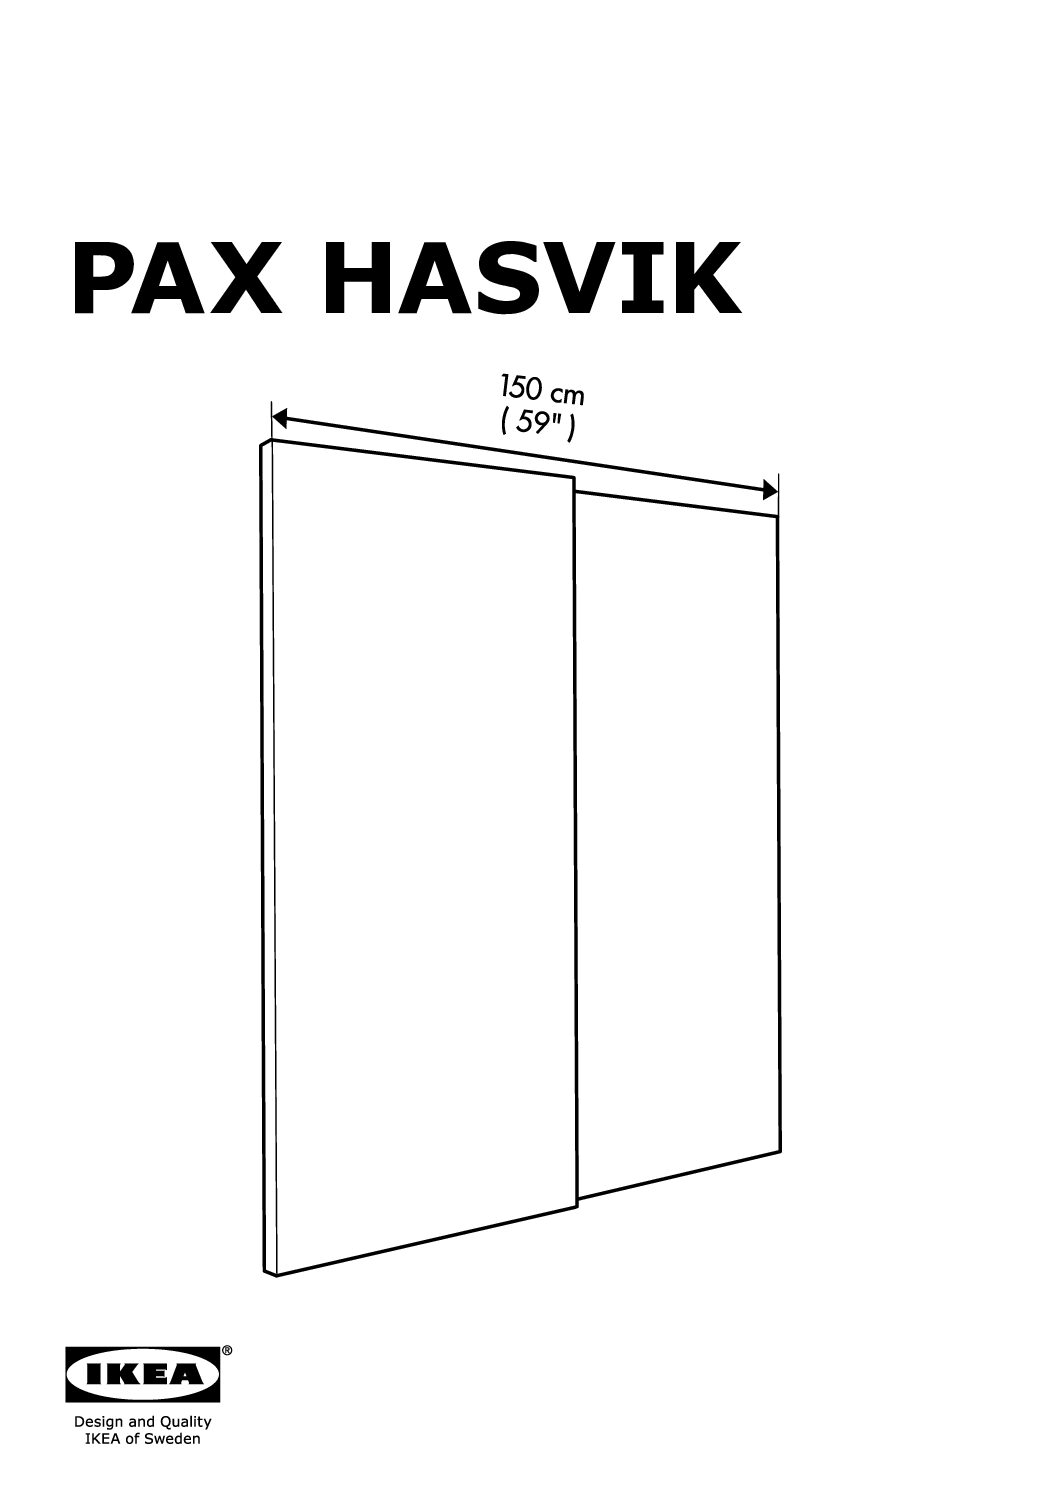 Ikea PAX HASVIK 150 Bedienungsanleitung